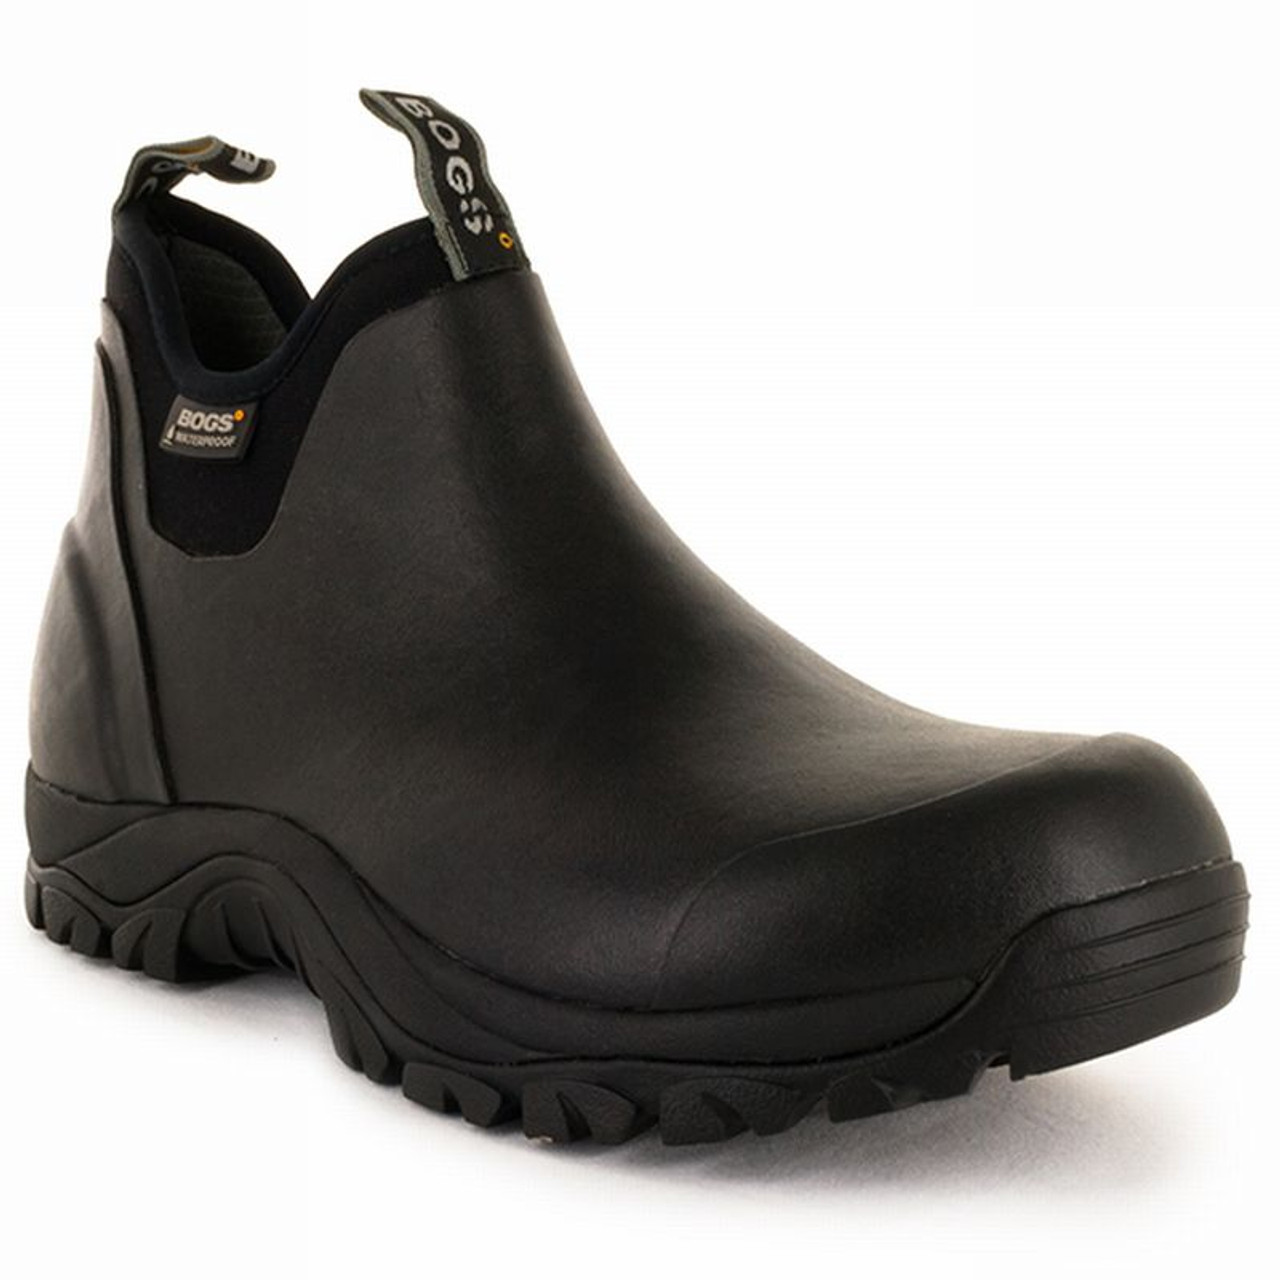 craftsman waterproof work boots